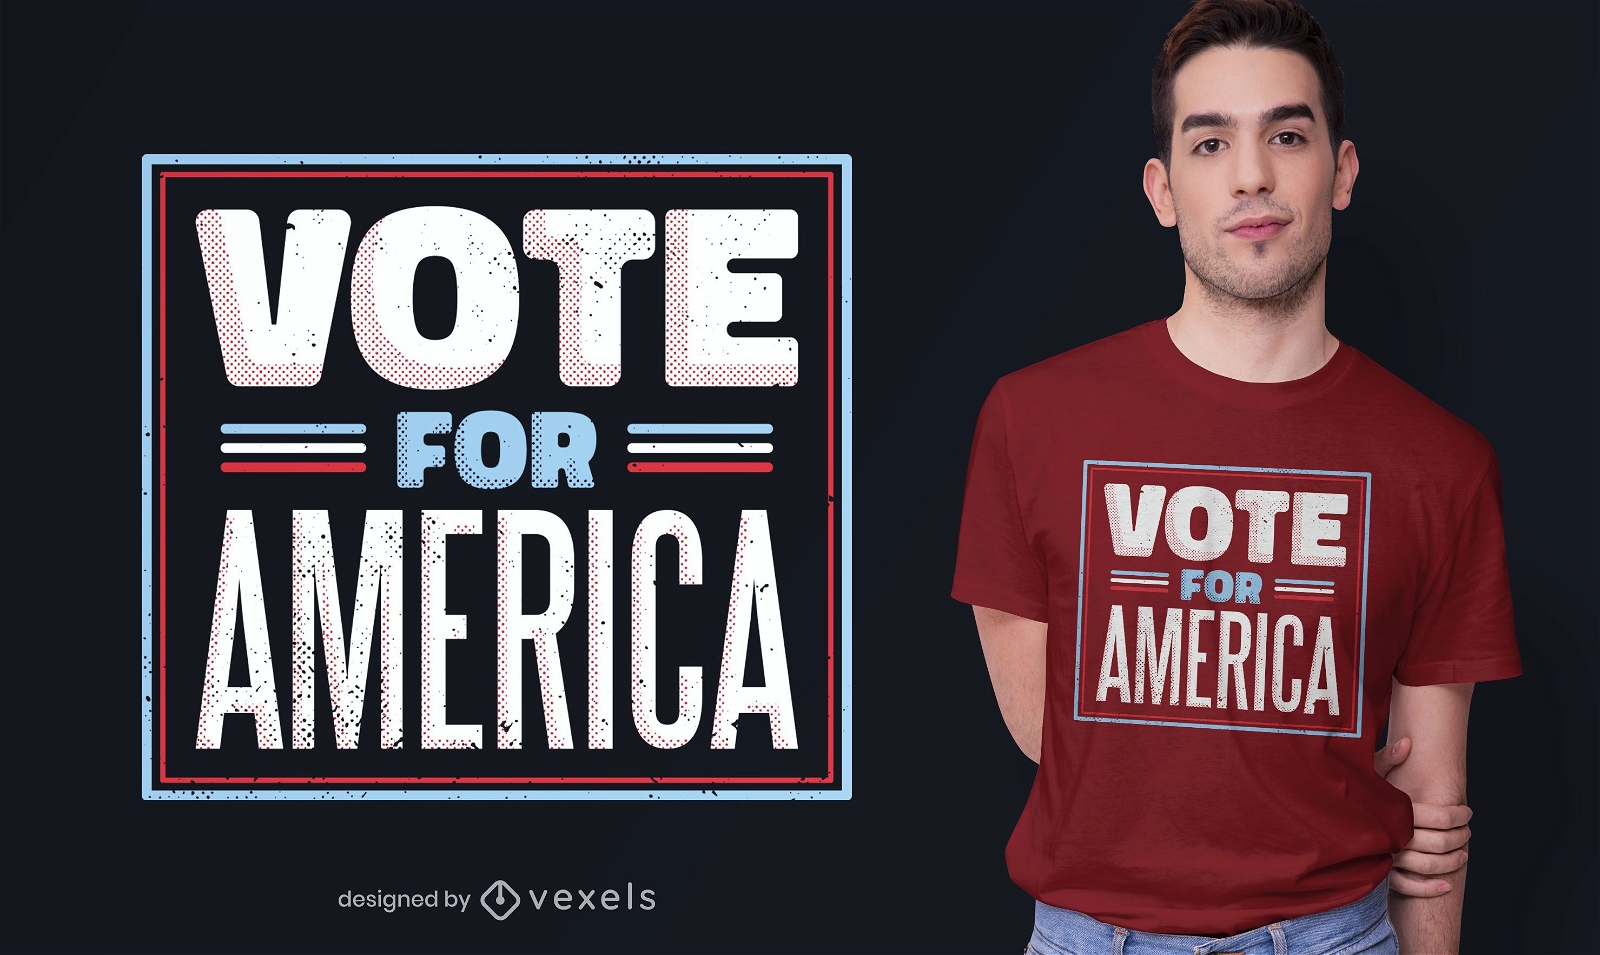 Vote for america t-shirt design